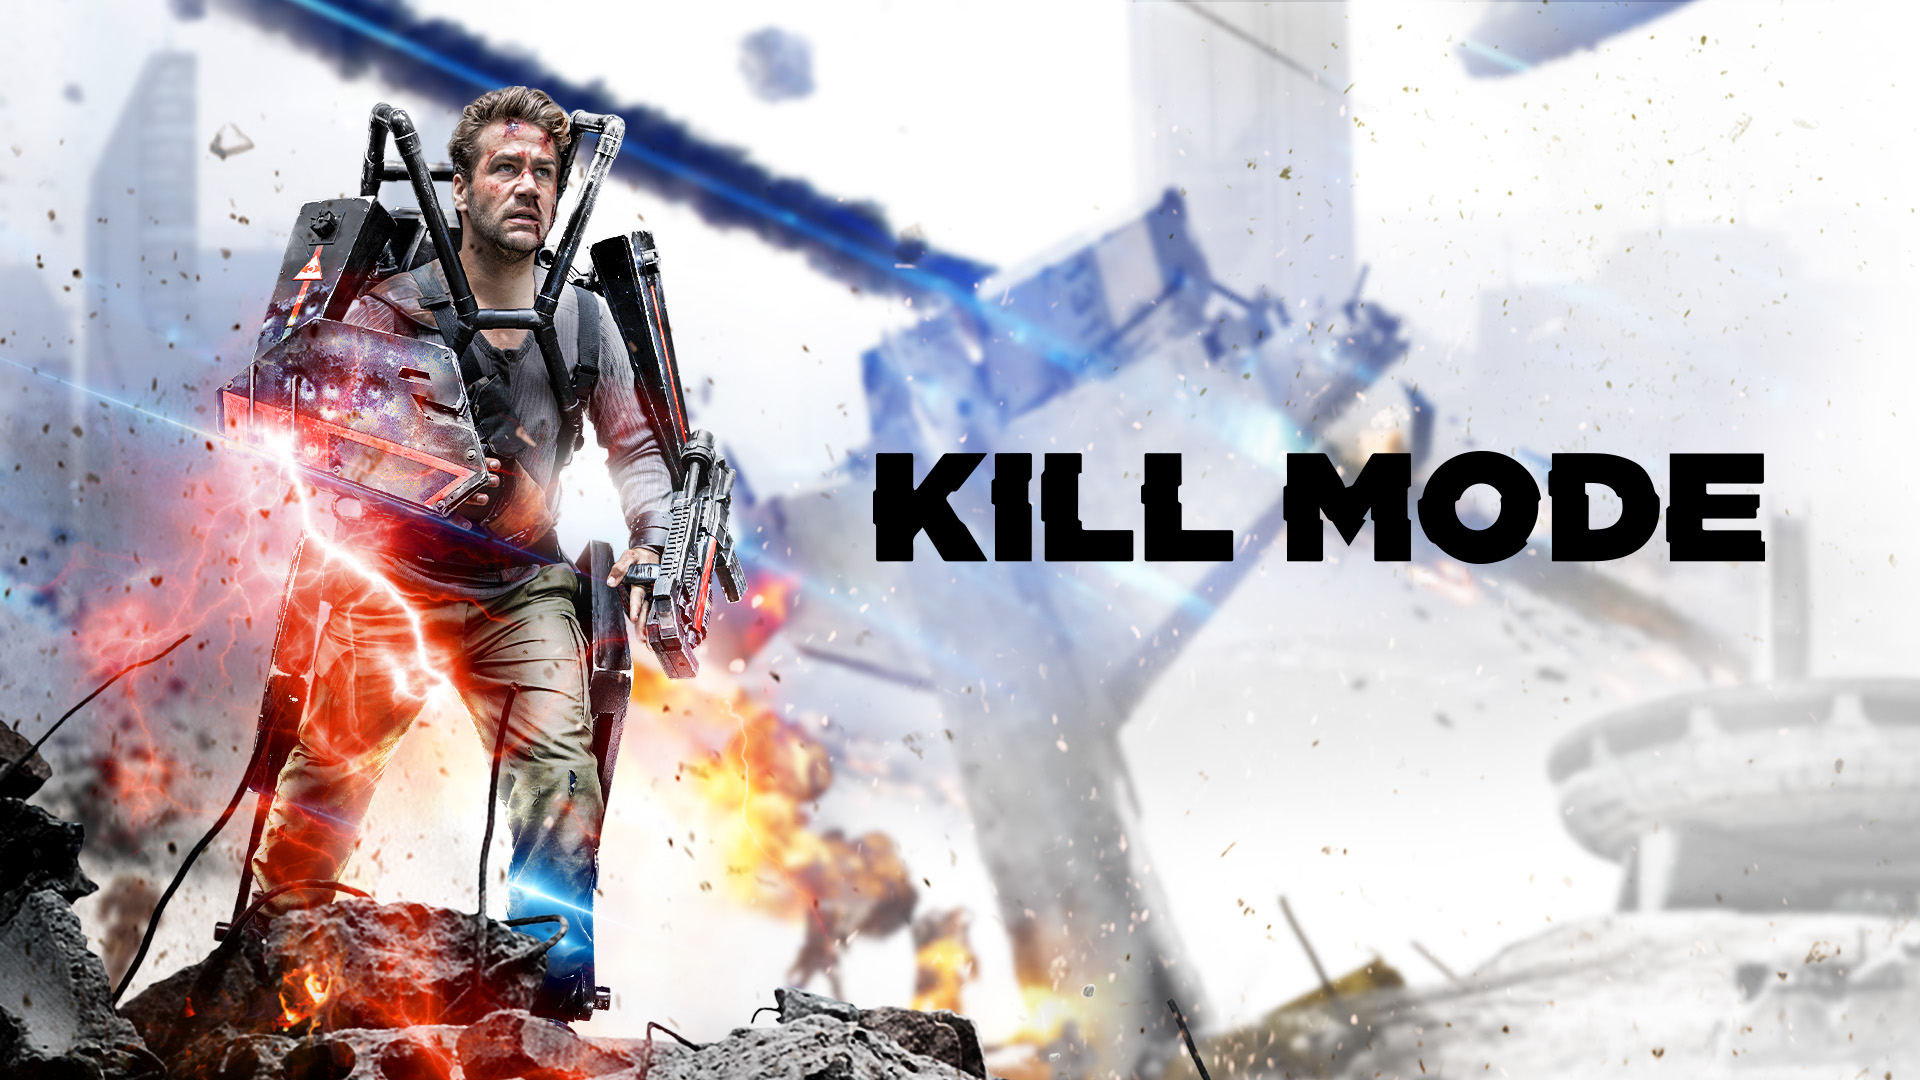 Kill mode poster